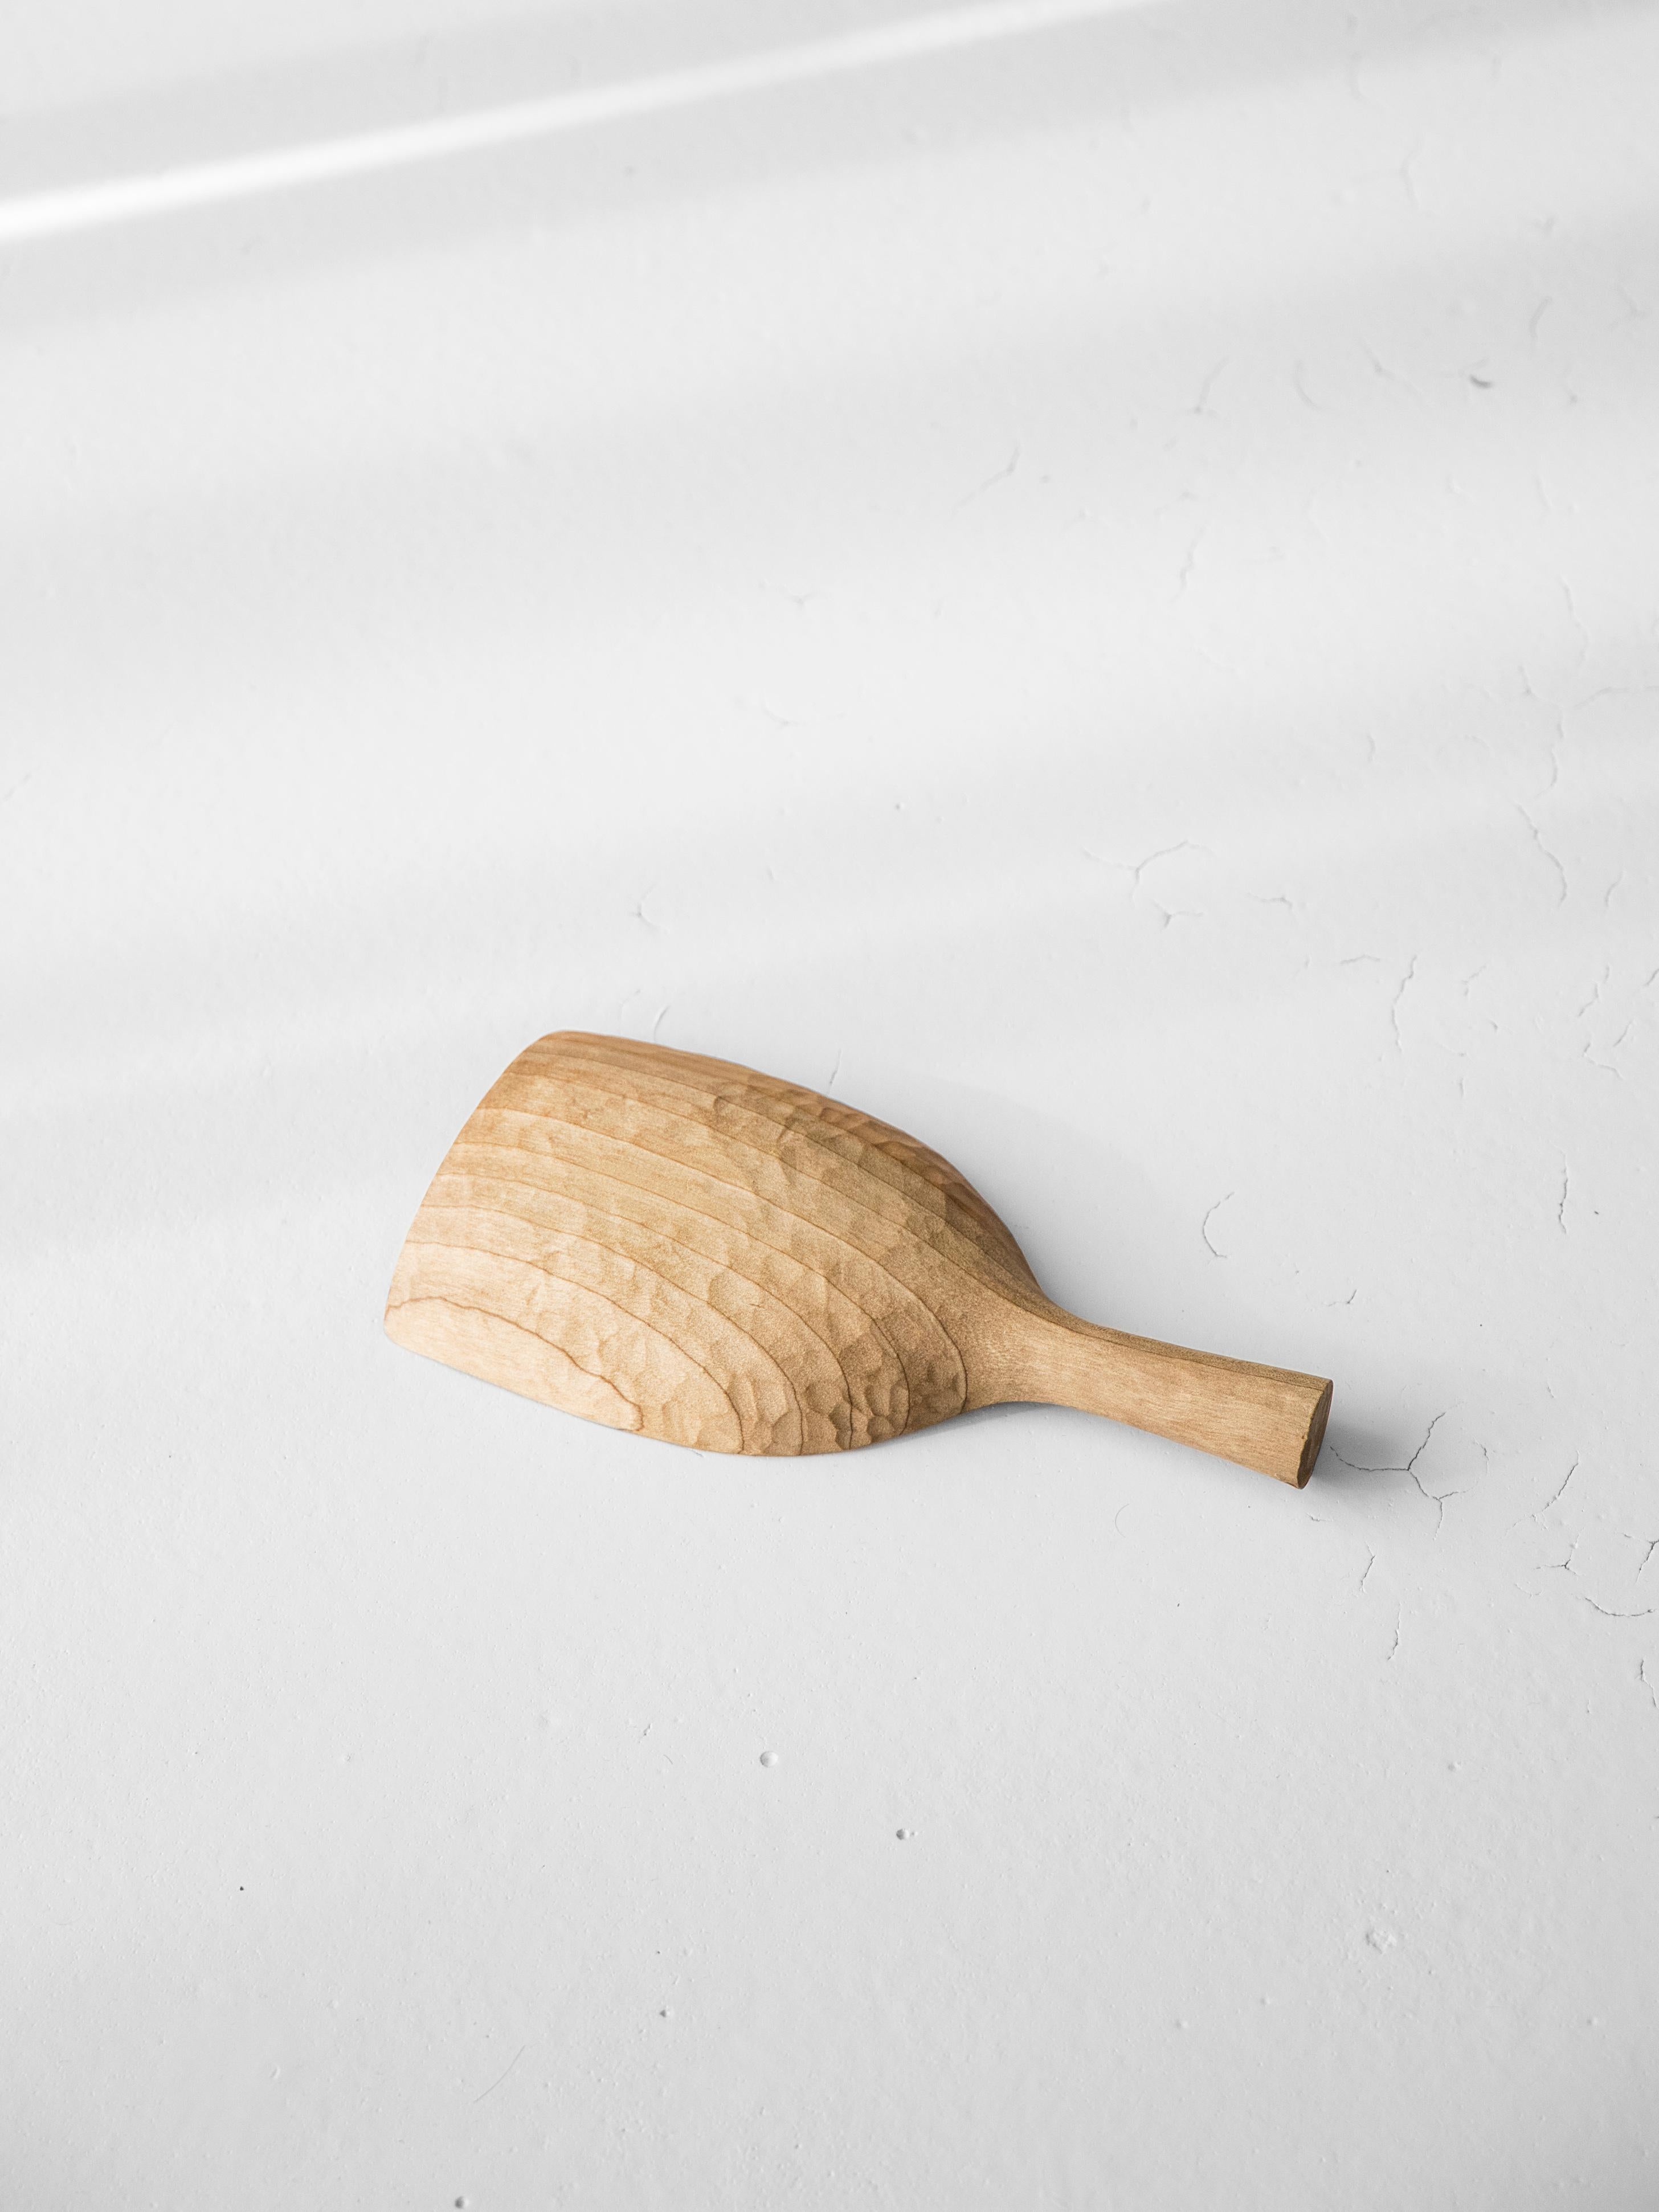 Hand-Crafted Sculptural Magnolia Spoon, Handmade in France Designer Ferréol Babin One of Kind